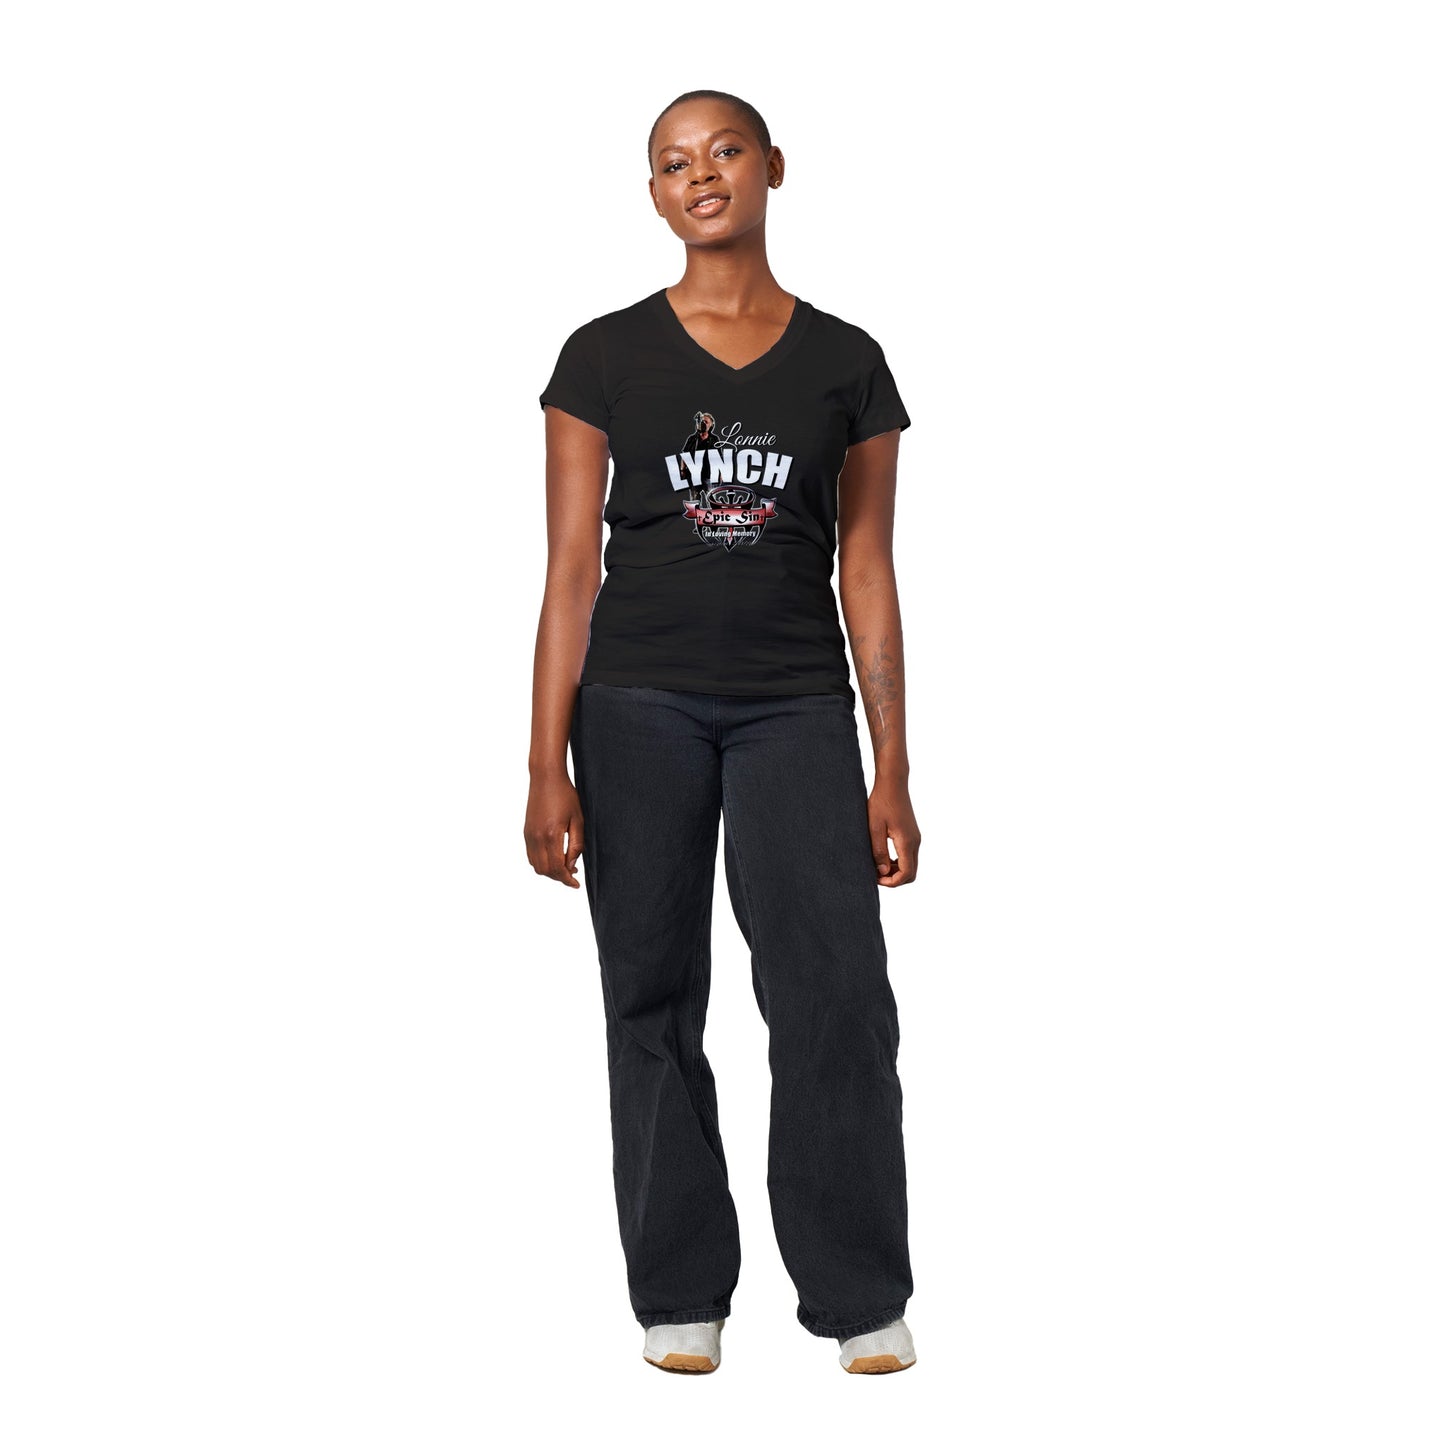 Lonnie Lynich (Epic Sin) Premium Womens V-Neck T-shirt